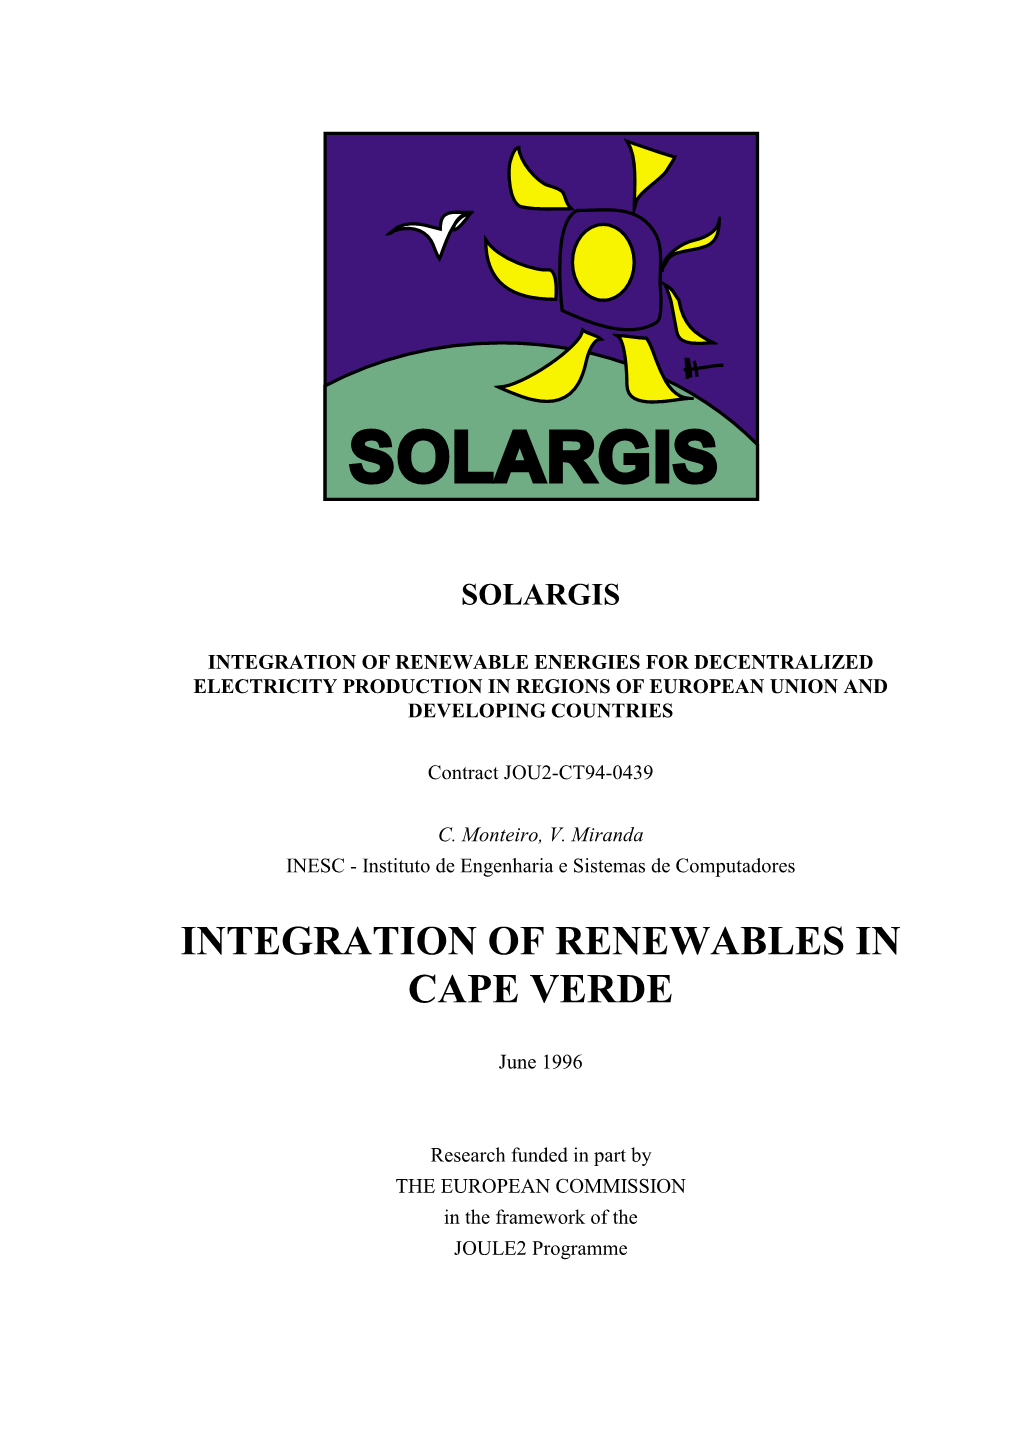 Integration of Renewables in Cape Verde